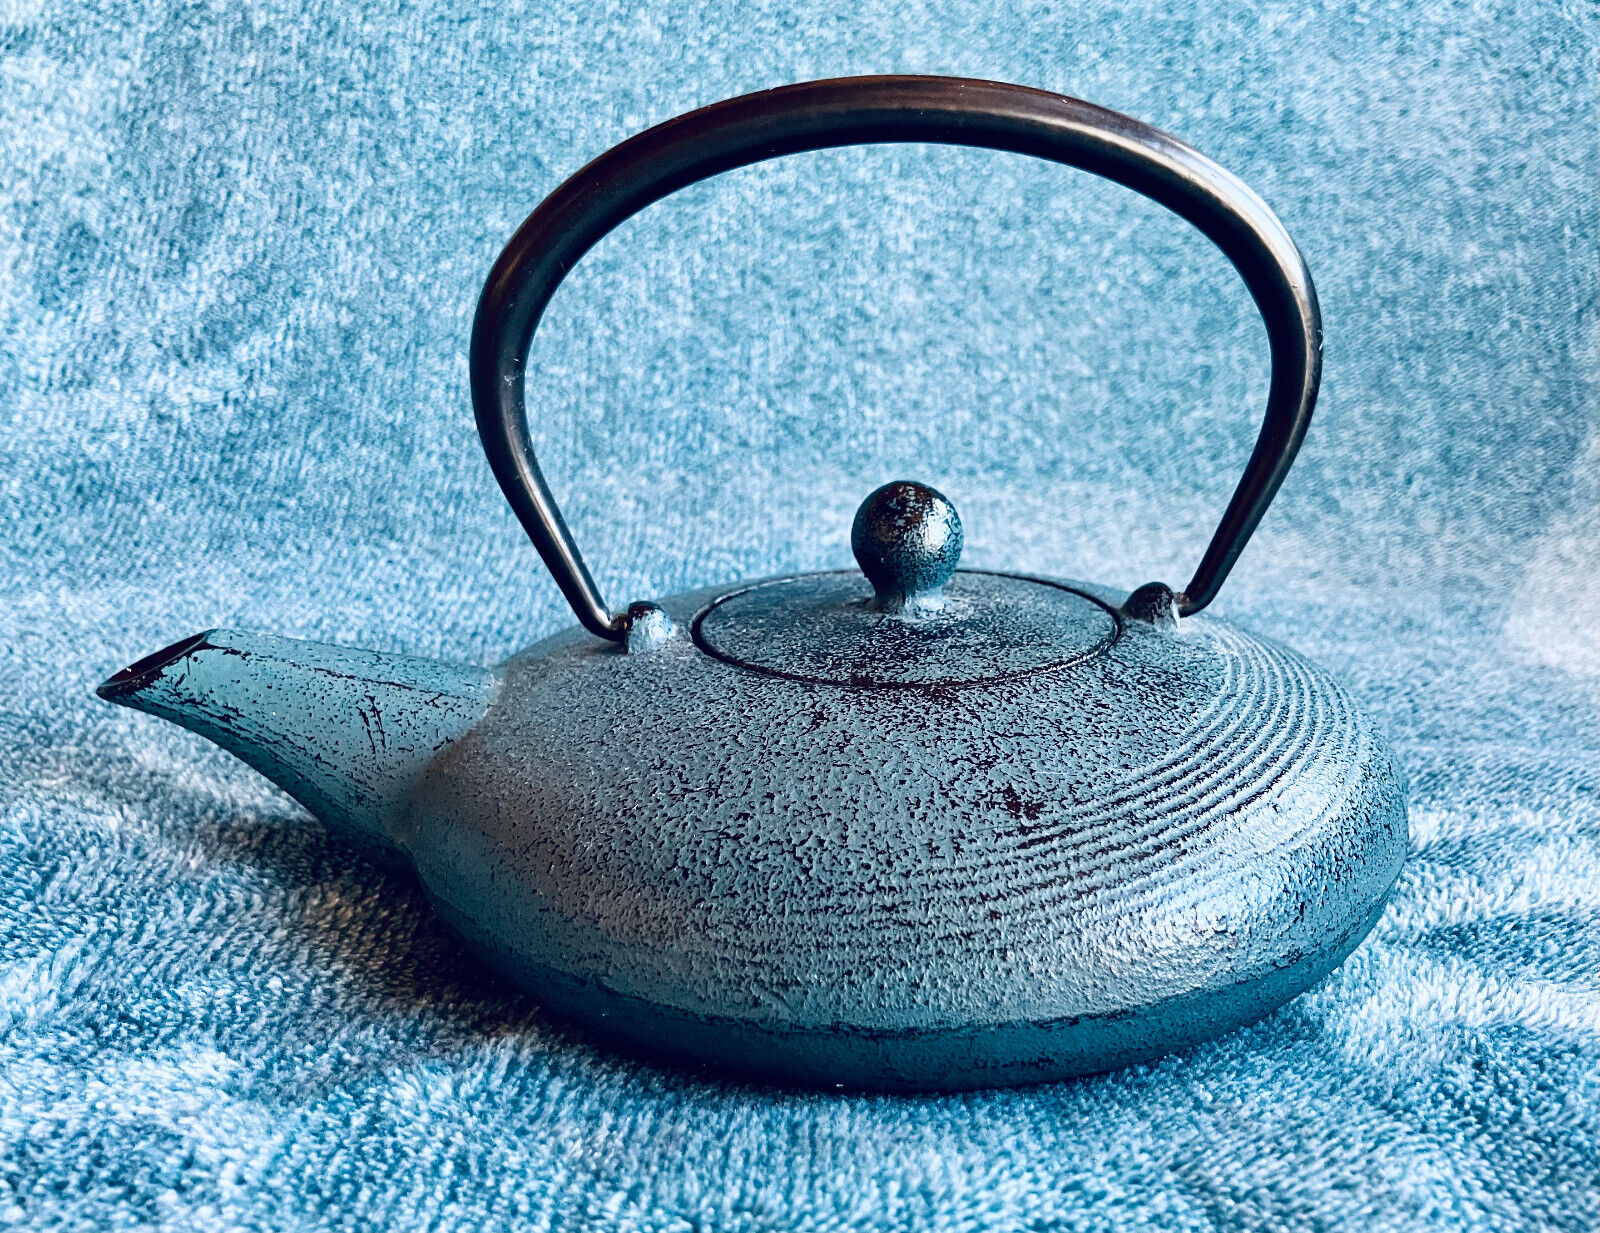 Quality Iwachu Nambu Cast Iron Teapot with Strainer - 12 oz - Japan - Used